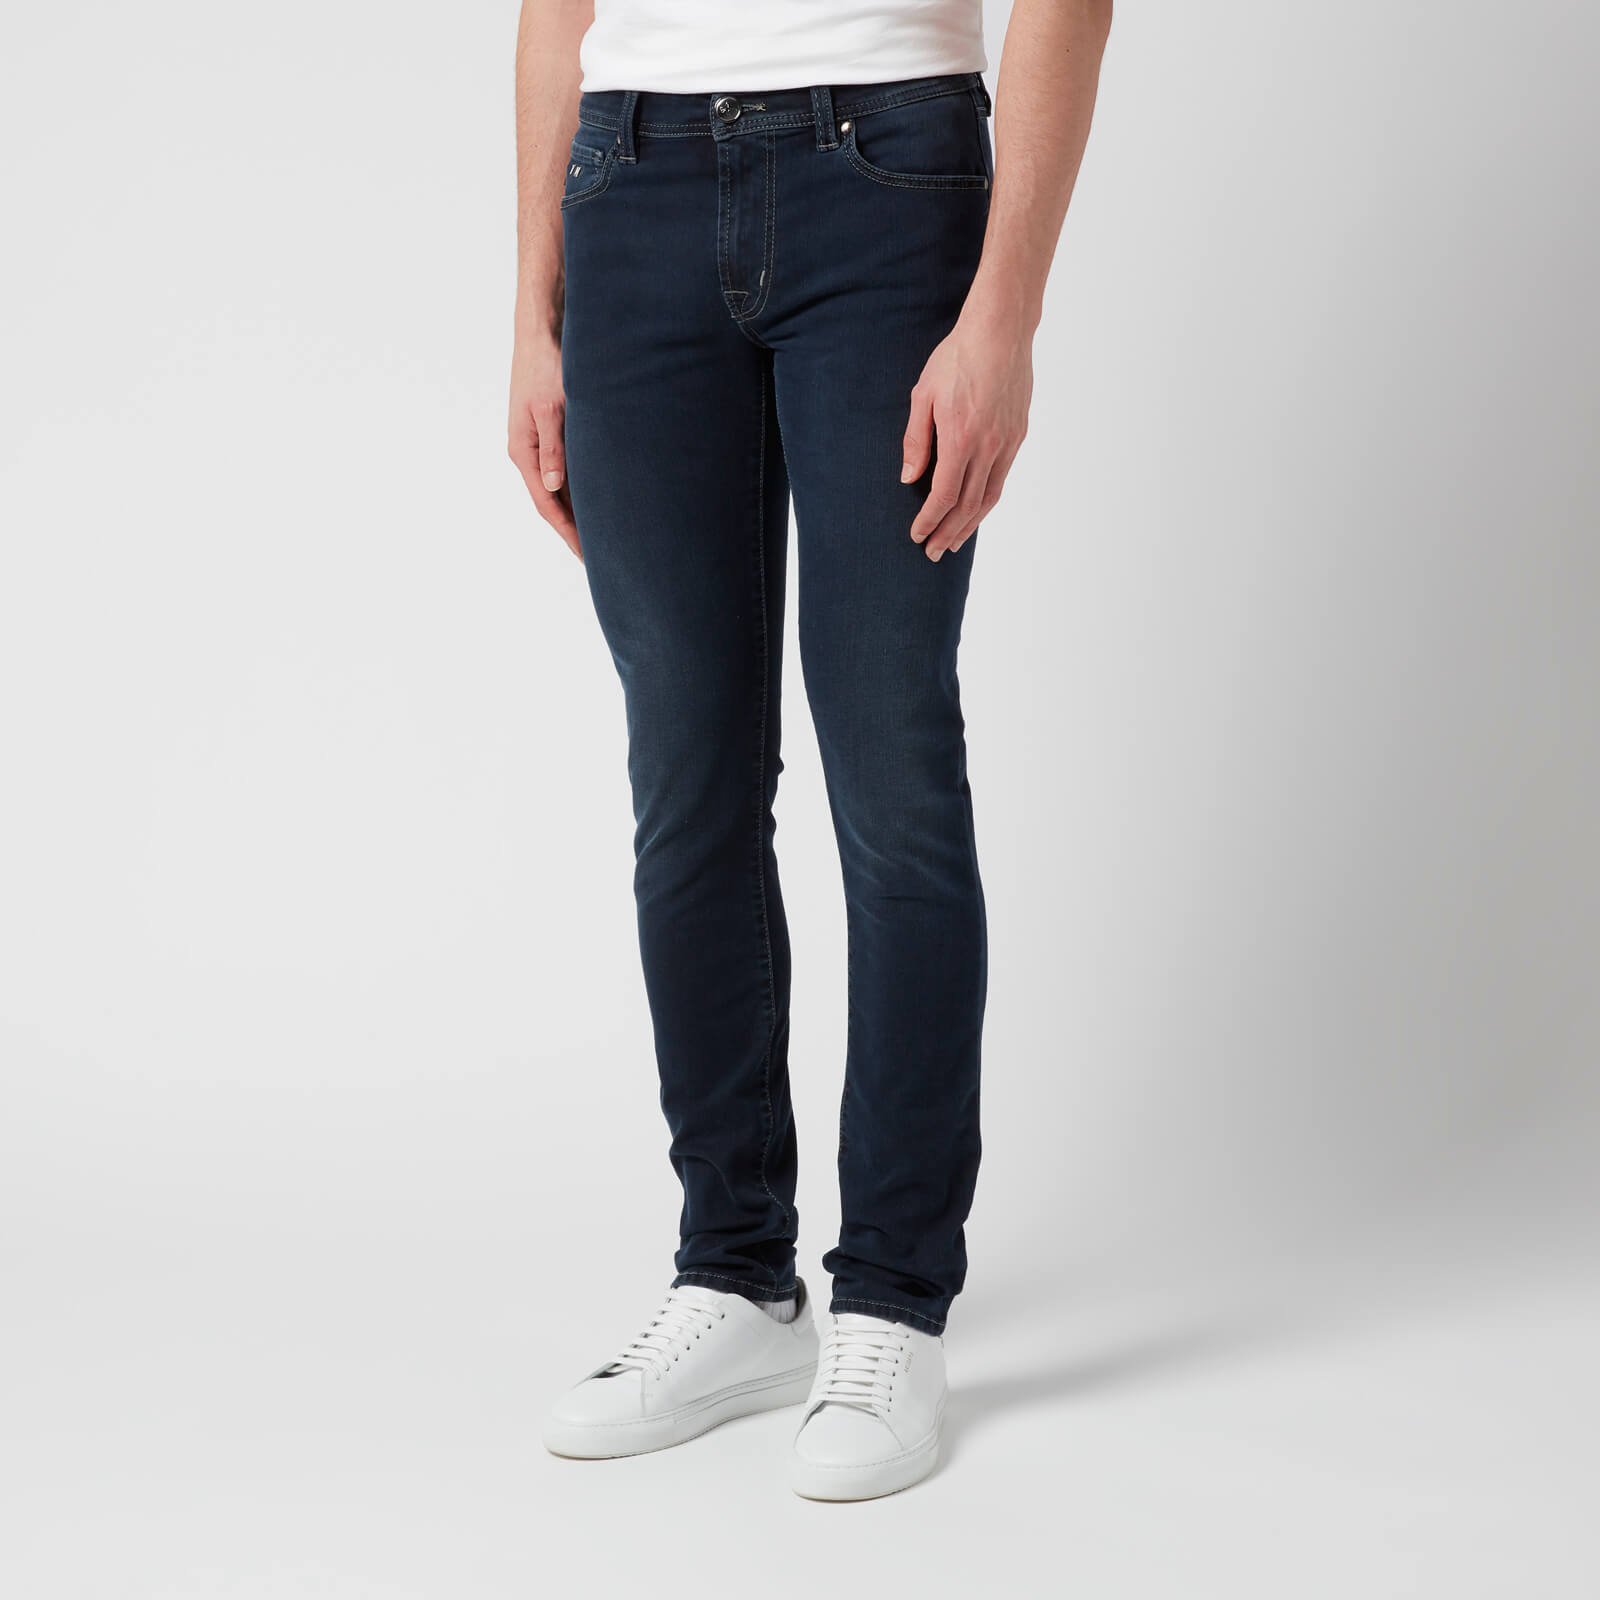 Tramarossa Men's Leonardo Slim Denim Jeans - Wash 4 - W34